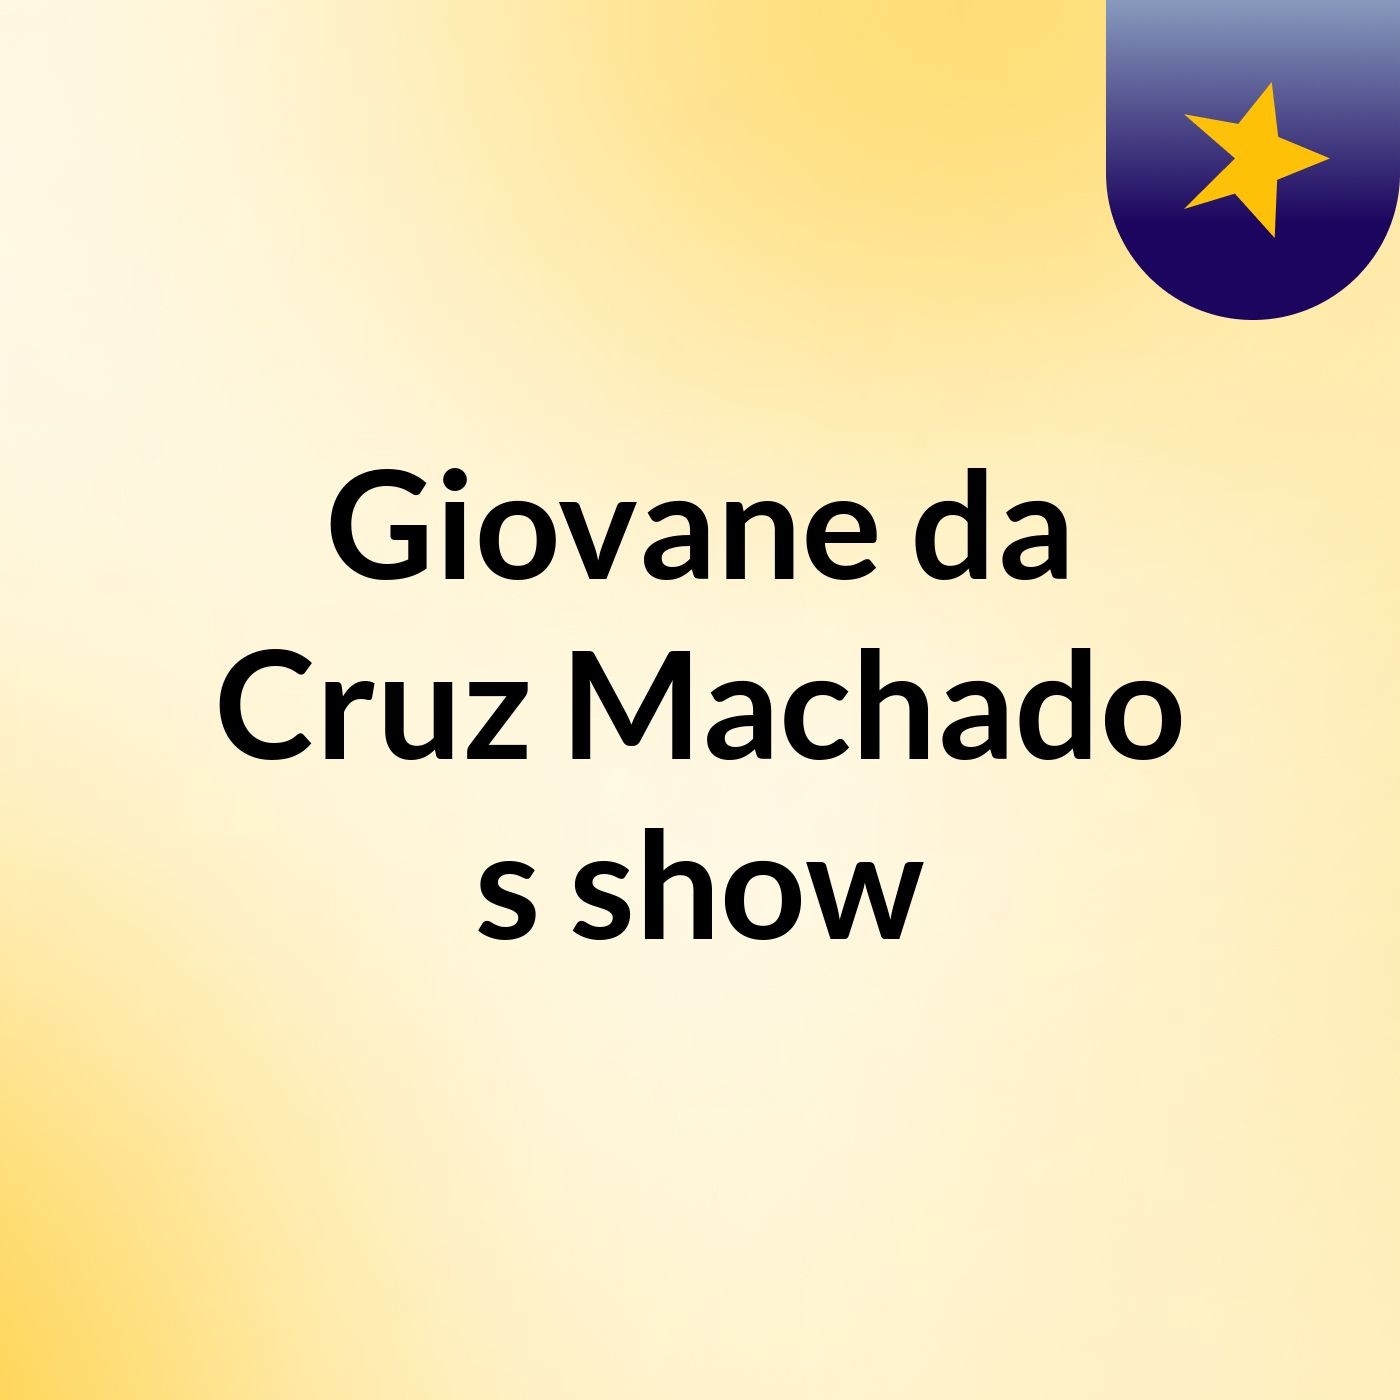 Giovane da Cruz Machado's show